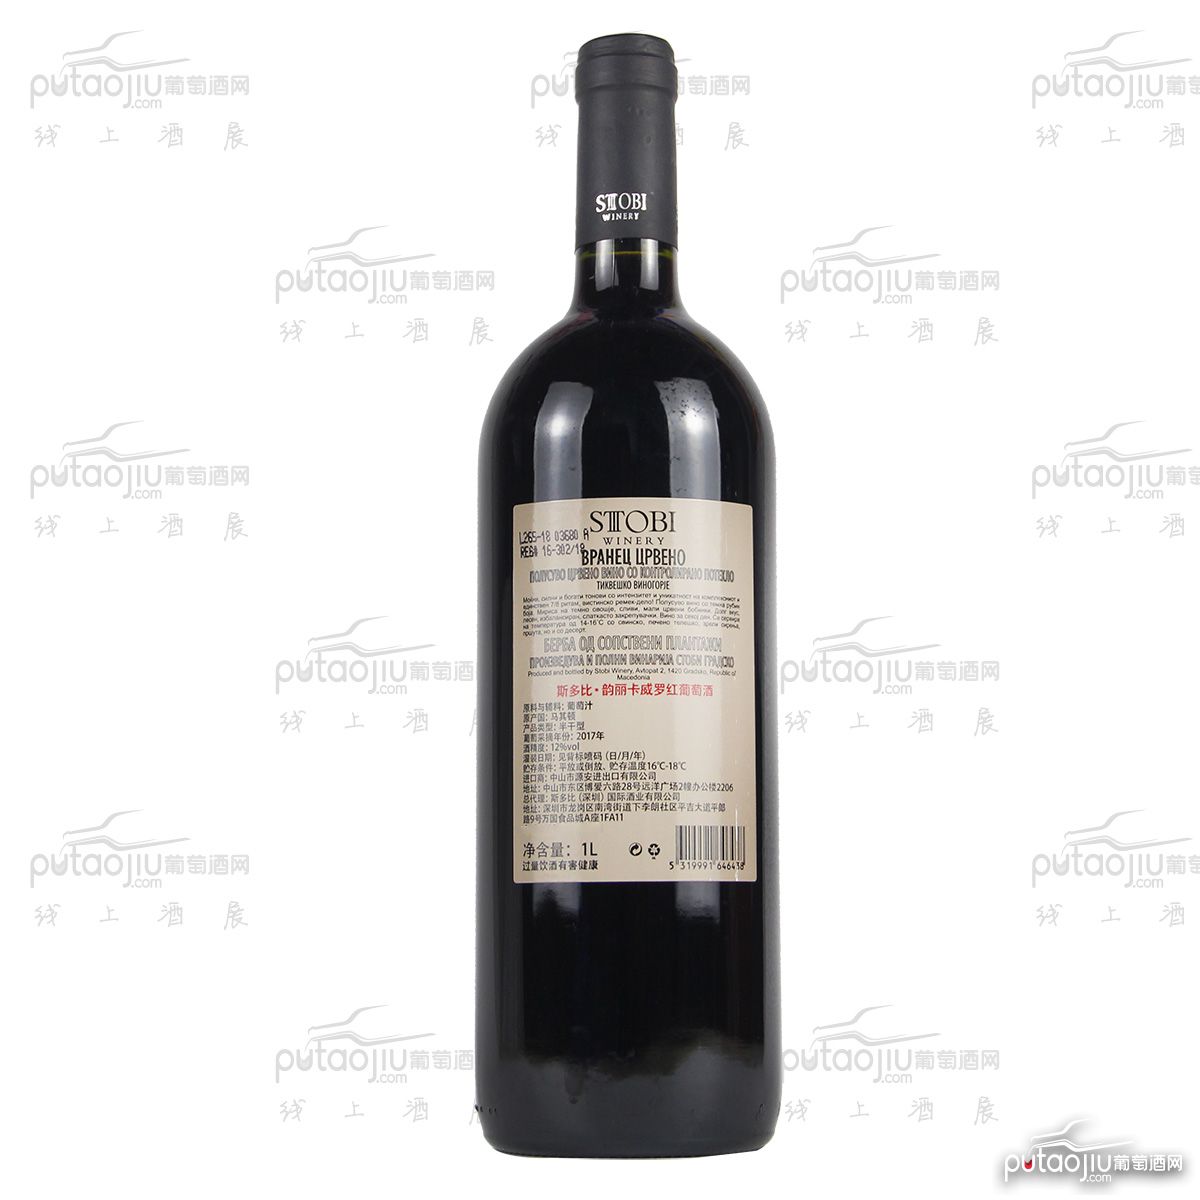 STOBI斯多比酒庄(VRANEC CRVENO)韵丽卡威罗A级半干红葡萄酒小众国家原装进口北马其顿红酒